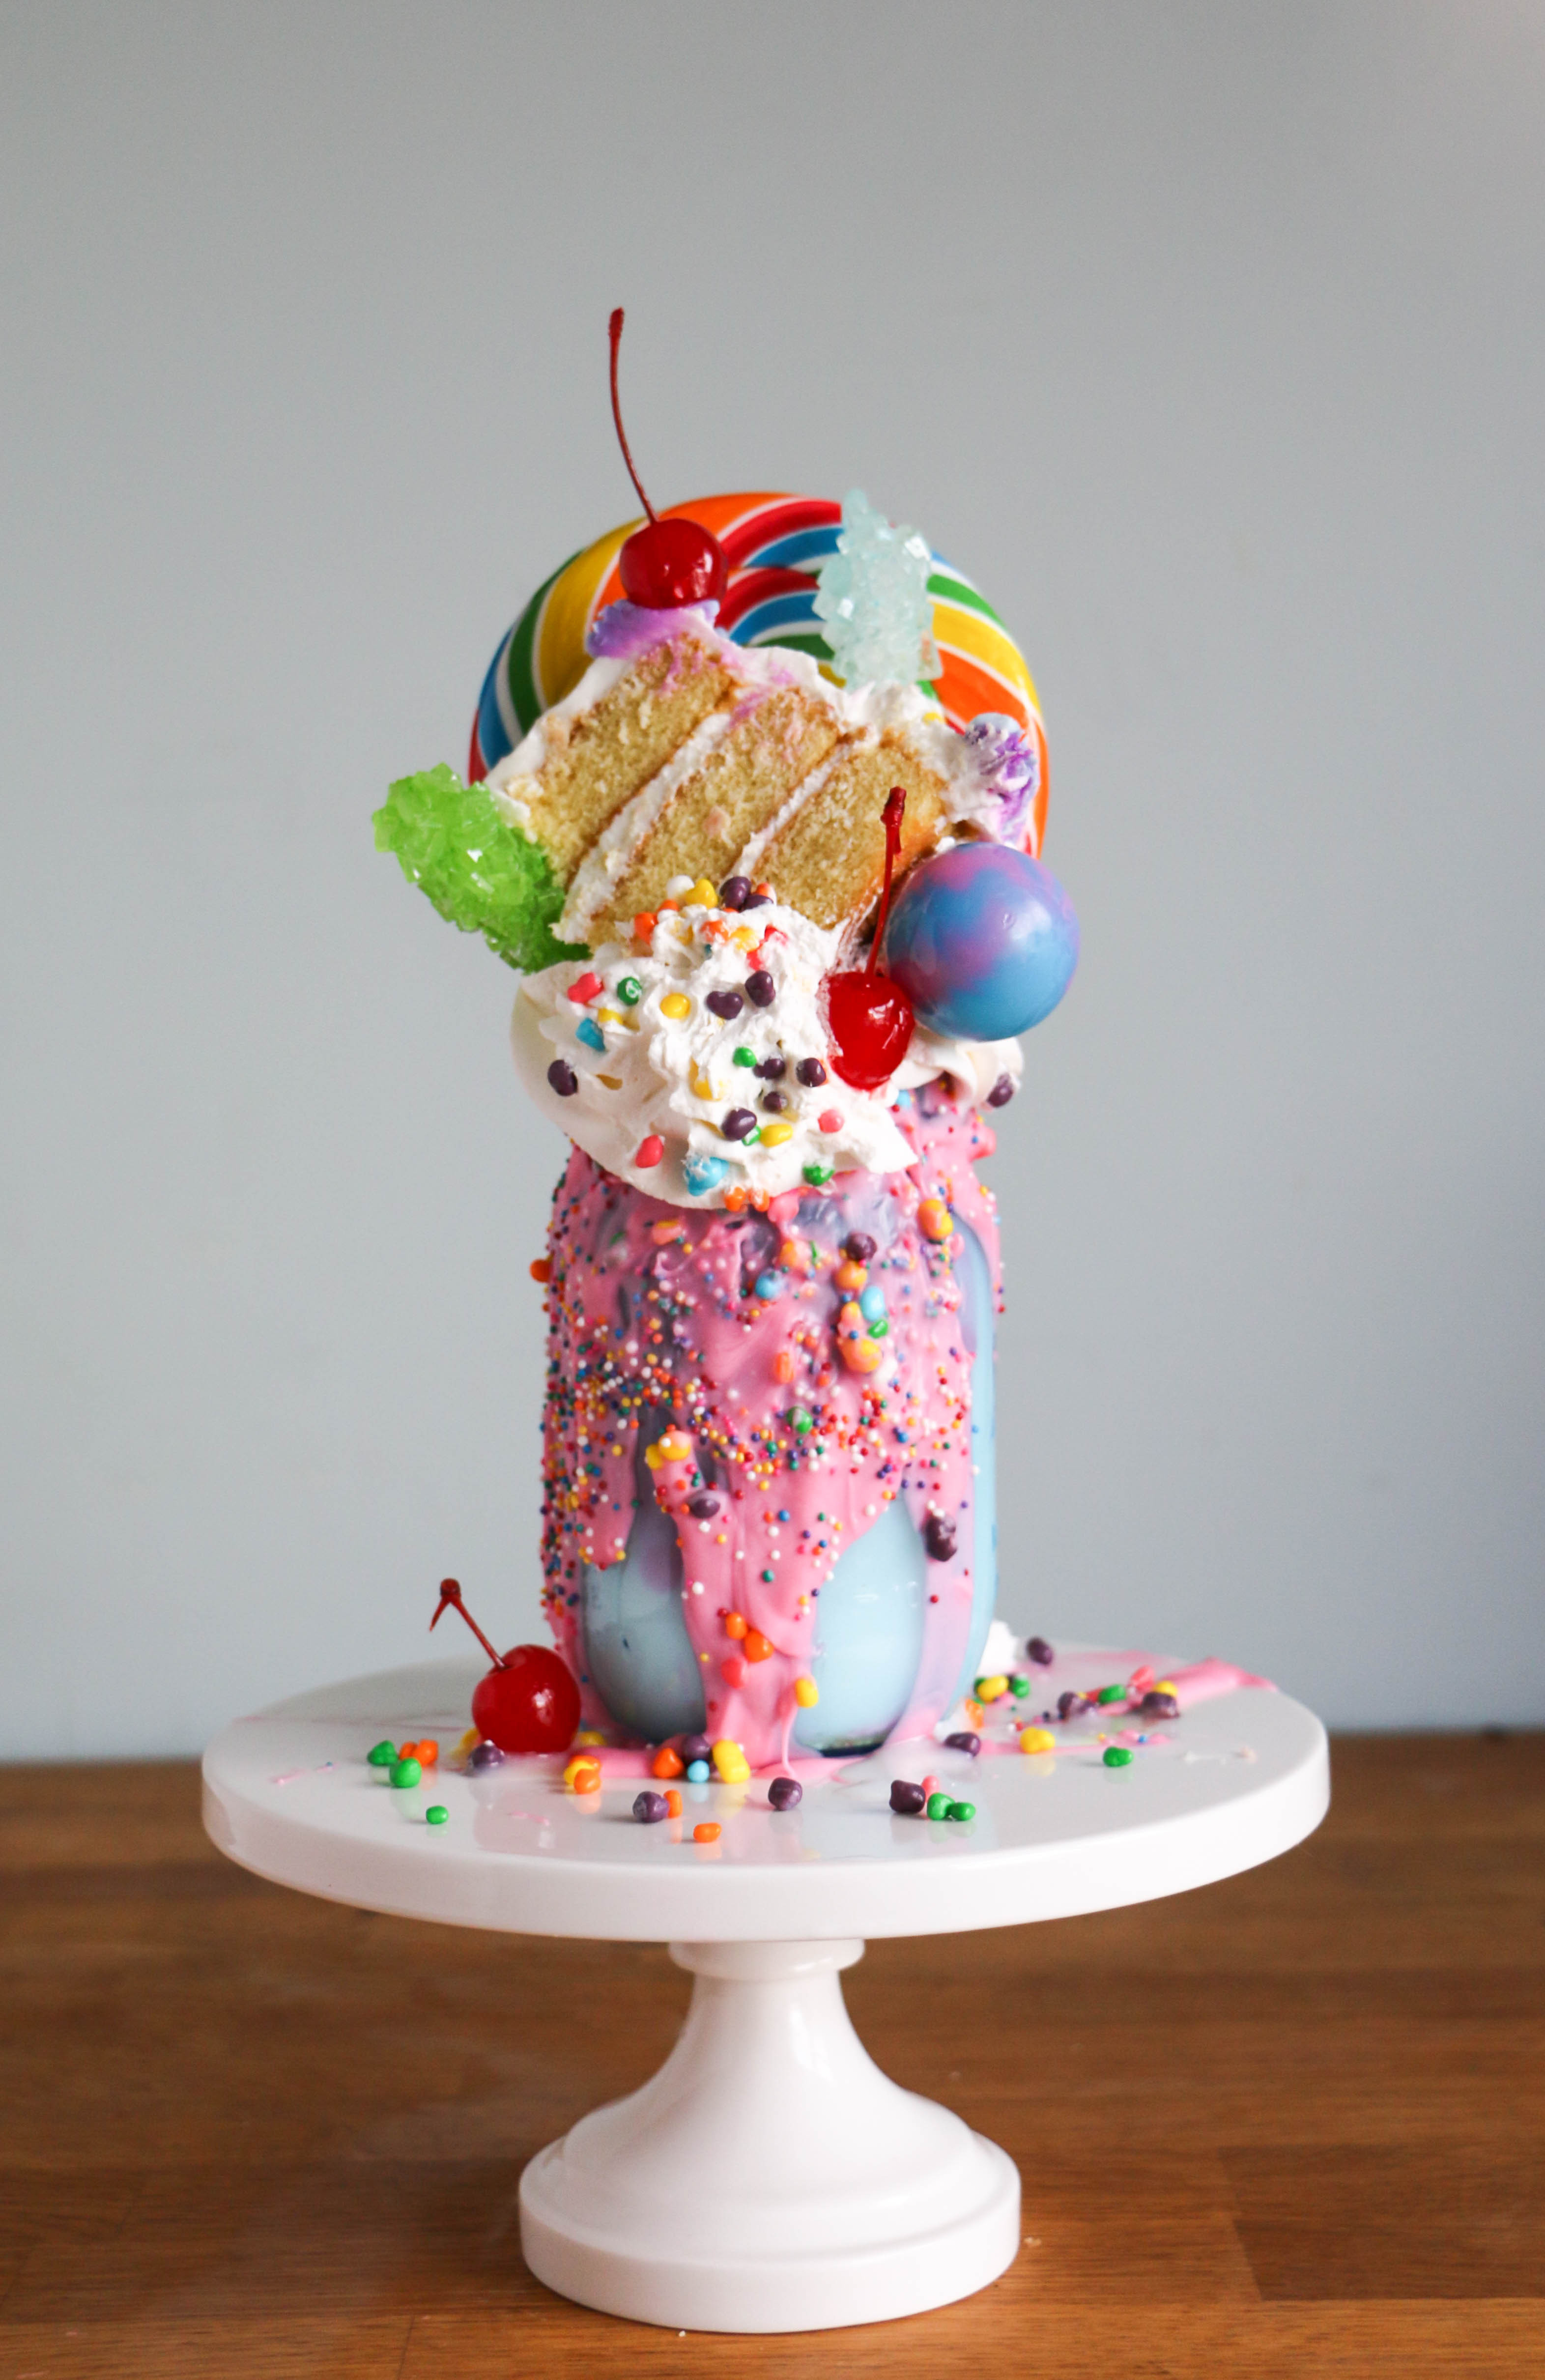 Best ideas about Birthday Cake Shake
. Save or Pin The Ultimate Milkshake Over the Top Milkshake Ideas Now.